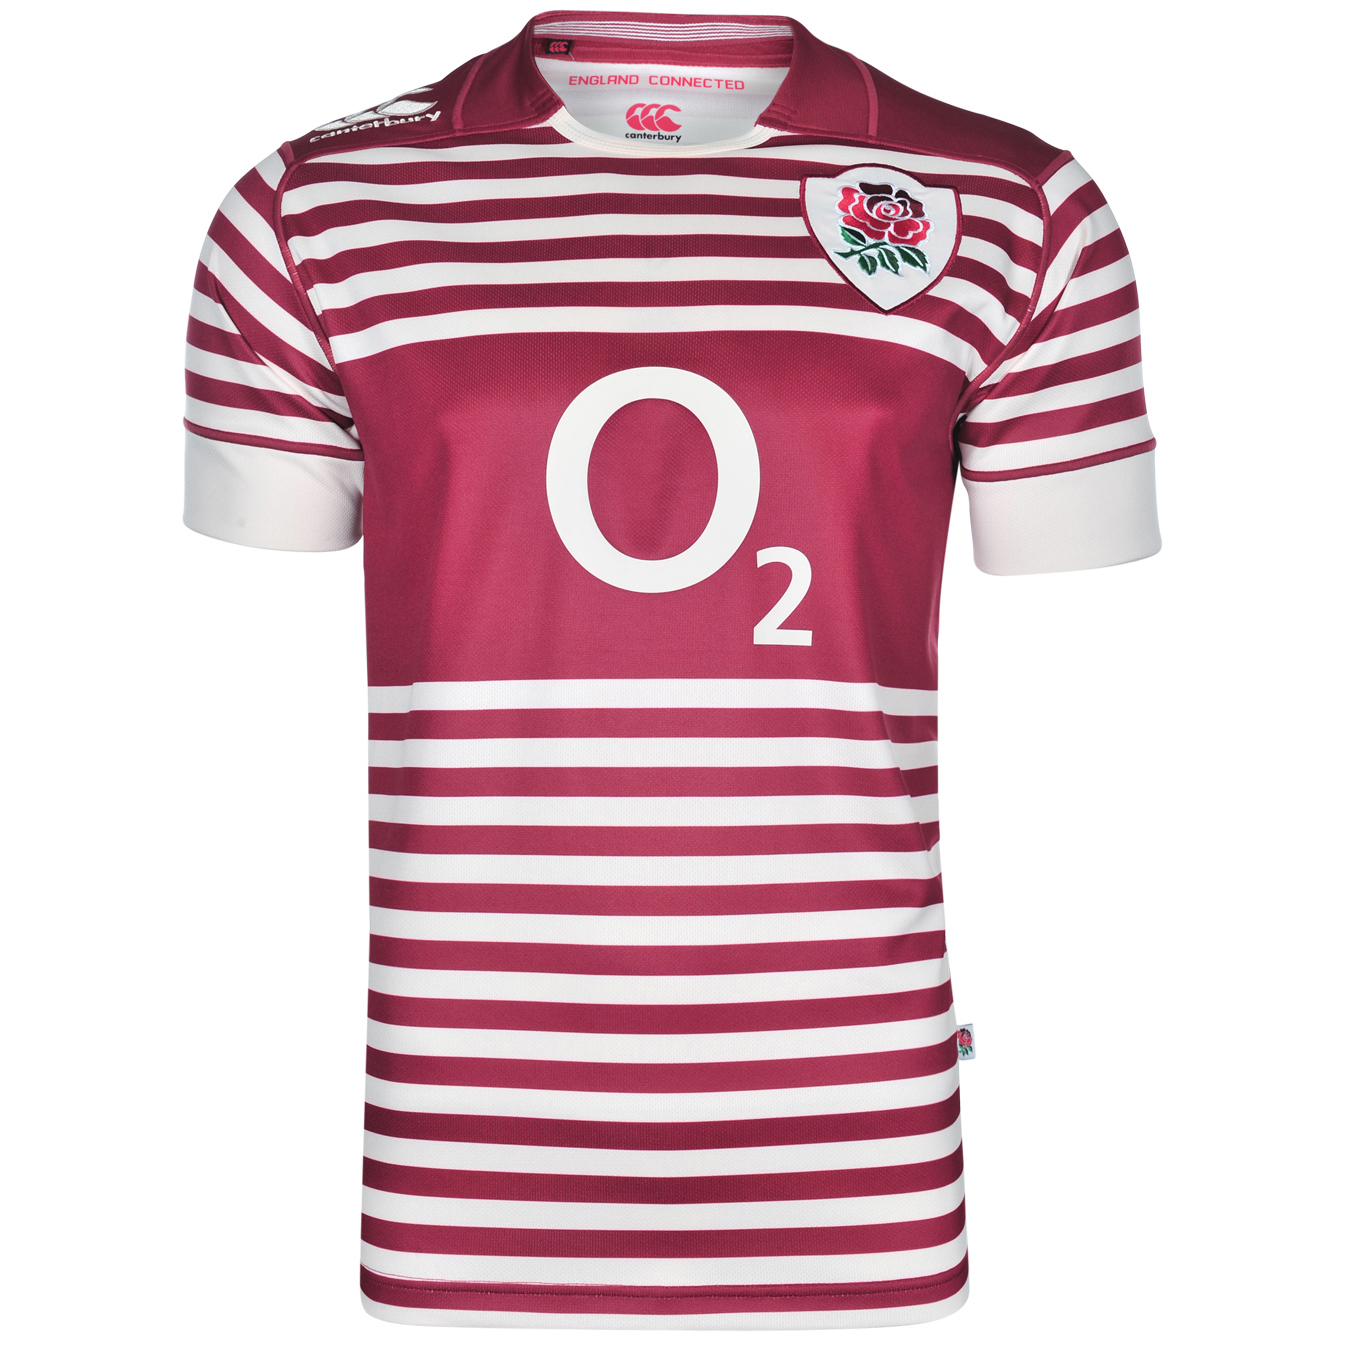 England Alternate Rugby Pro Shirt 2013/14 - Kids